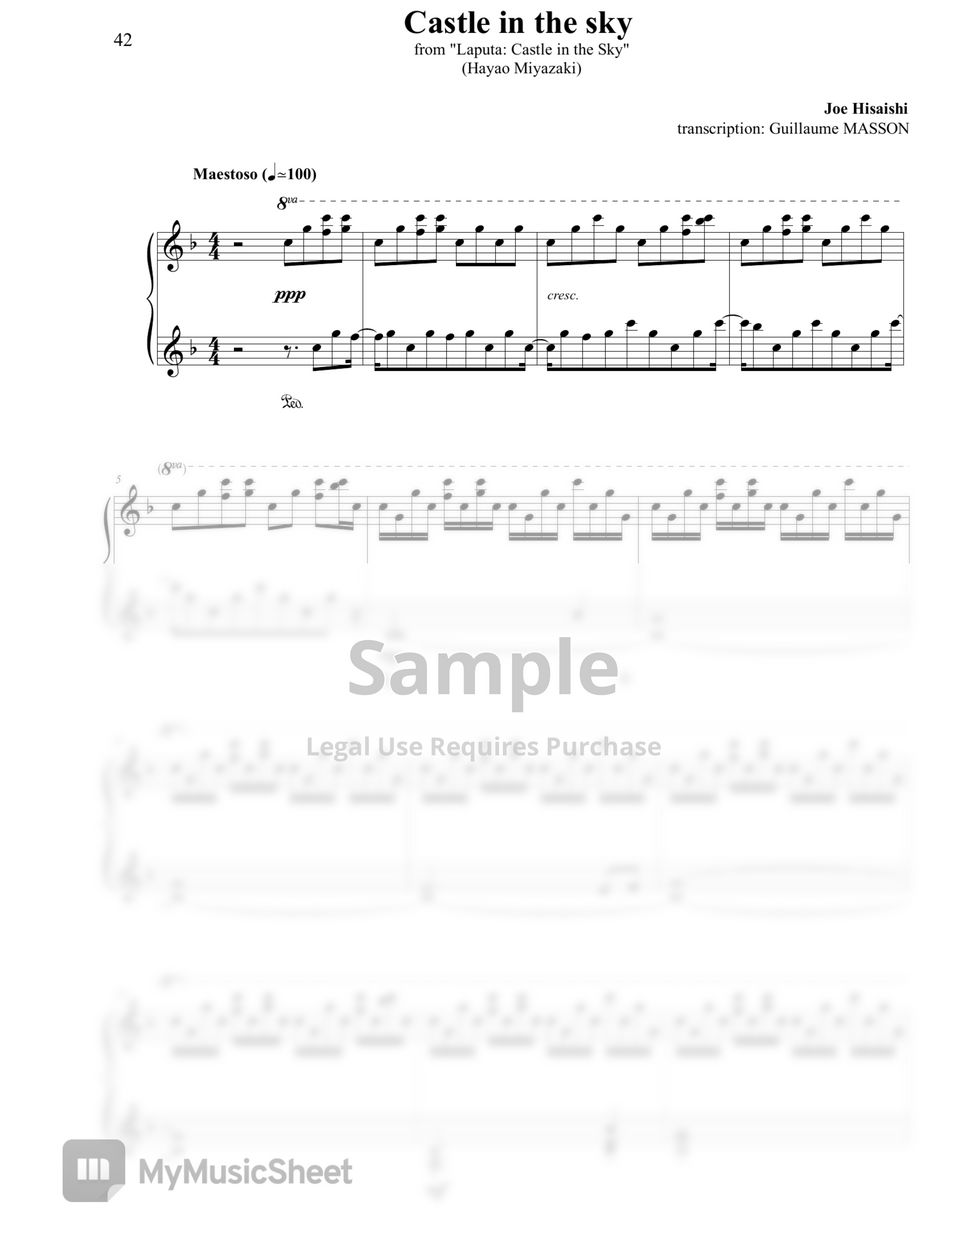 Joe Hisaishi - Laputa Piano Collection by Guillaume Masson